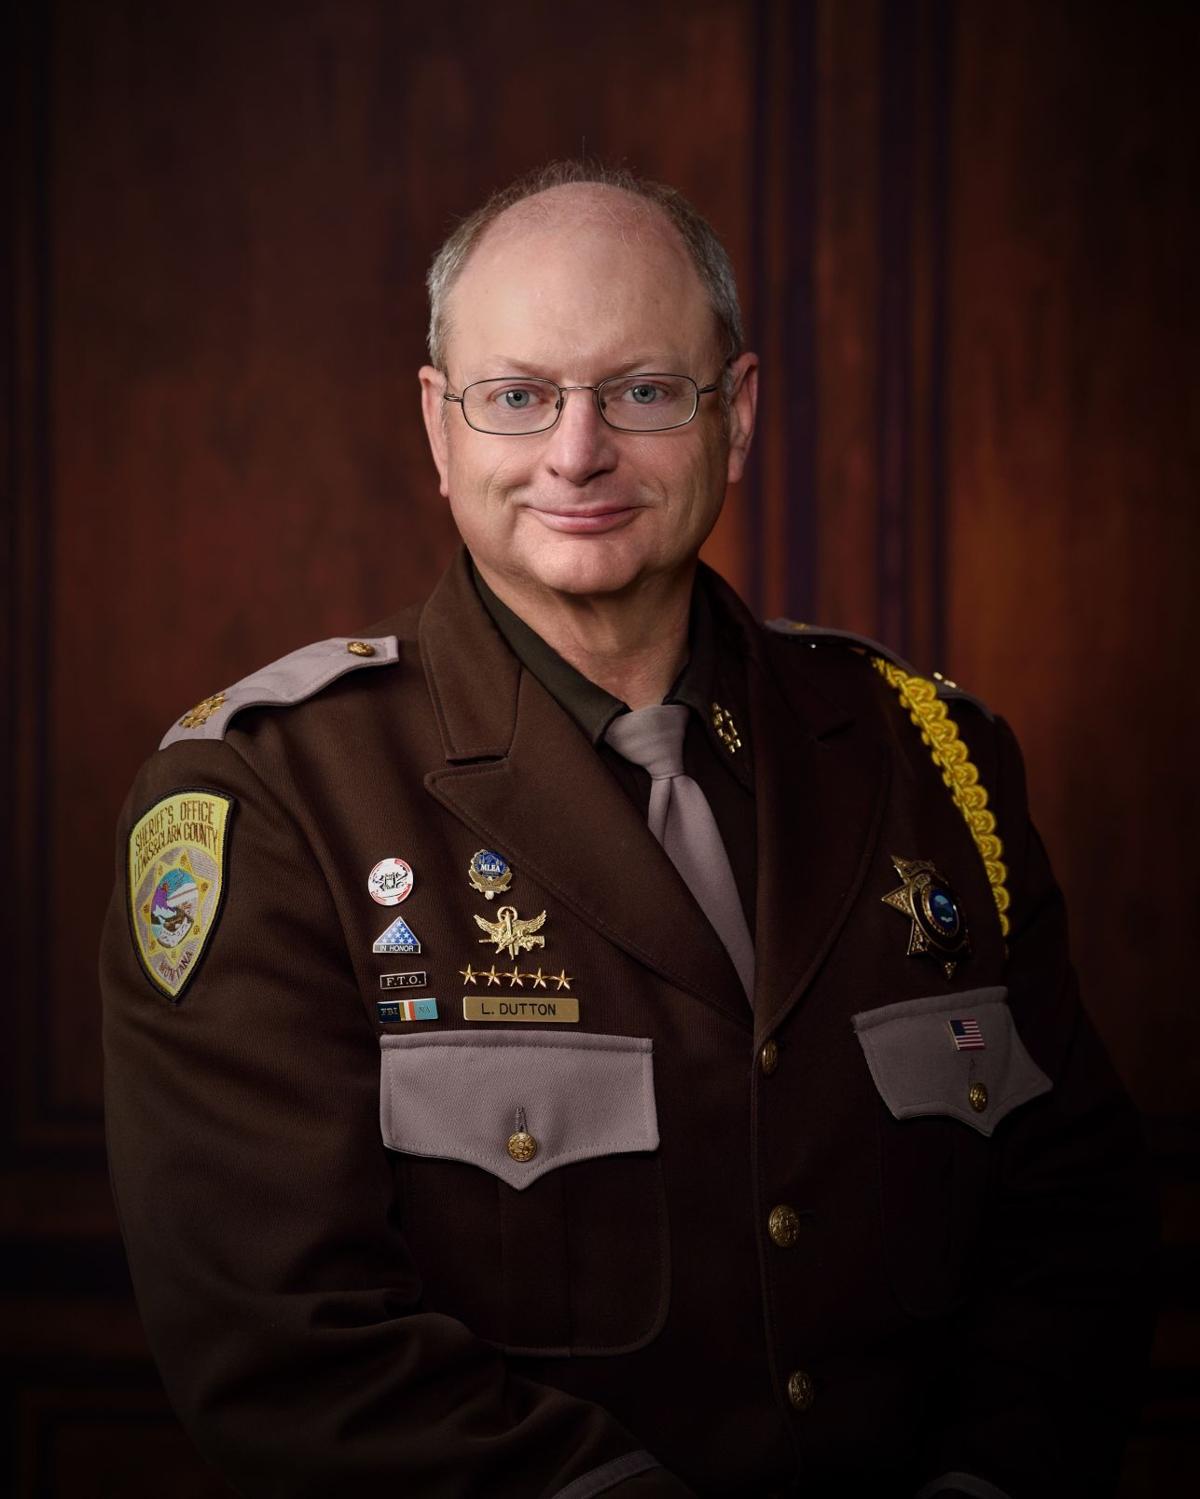 Lyon County deputy becoming Chase County Sheriff, Cln